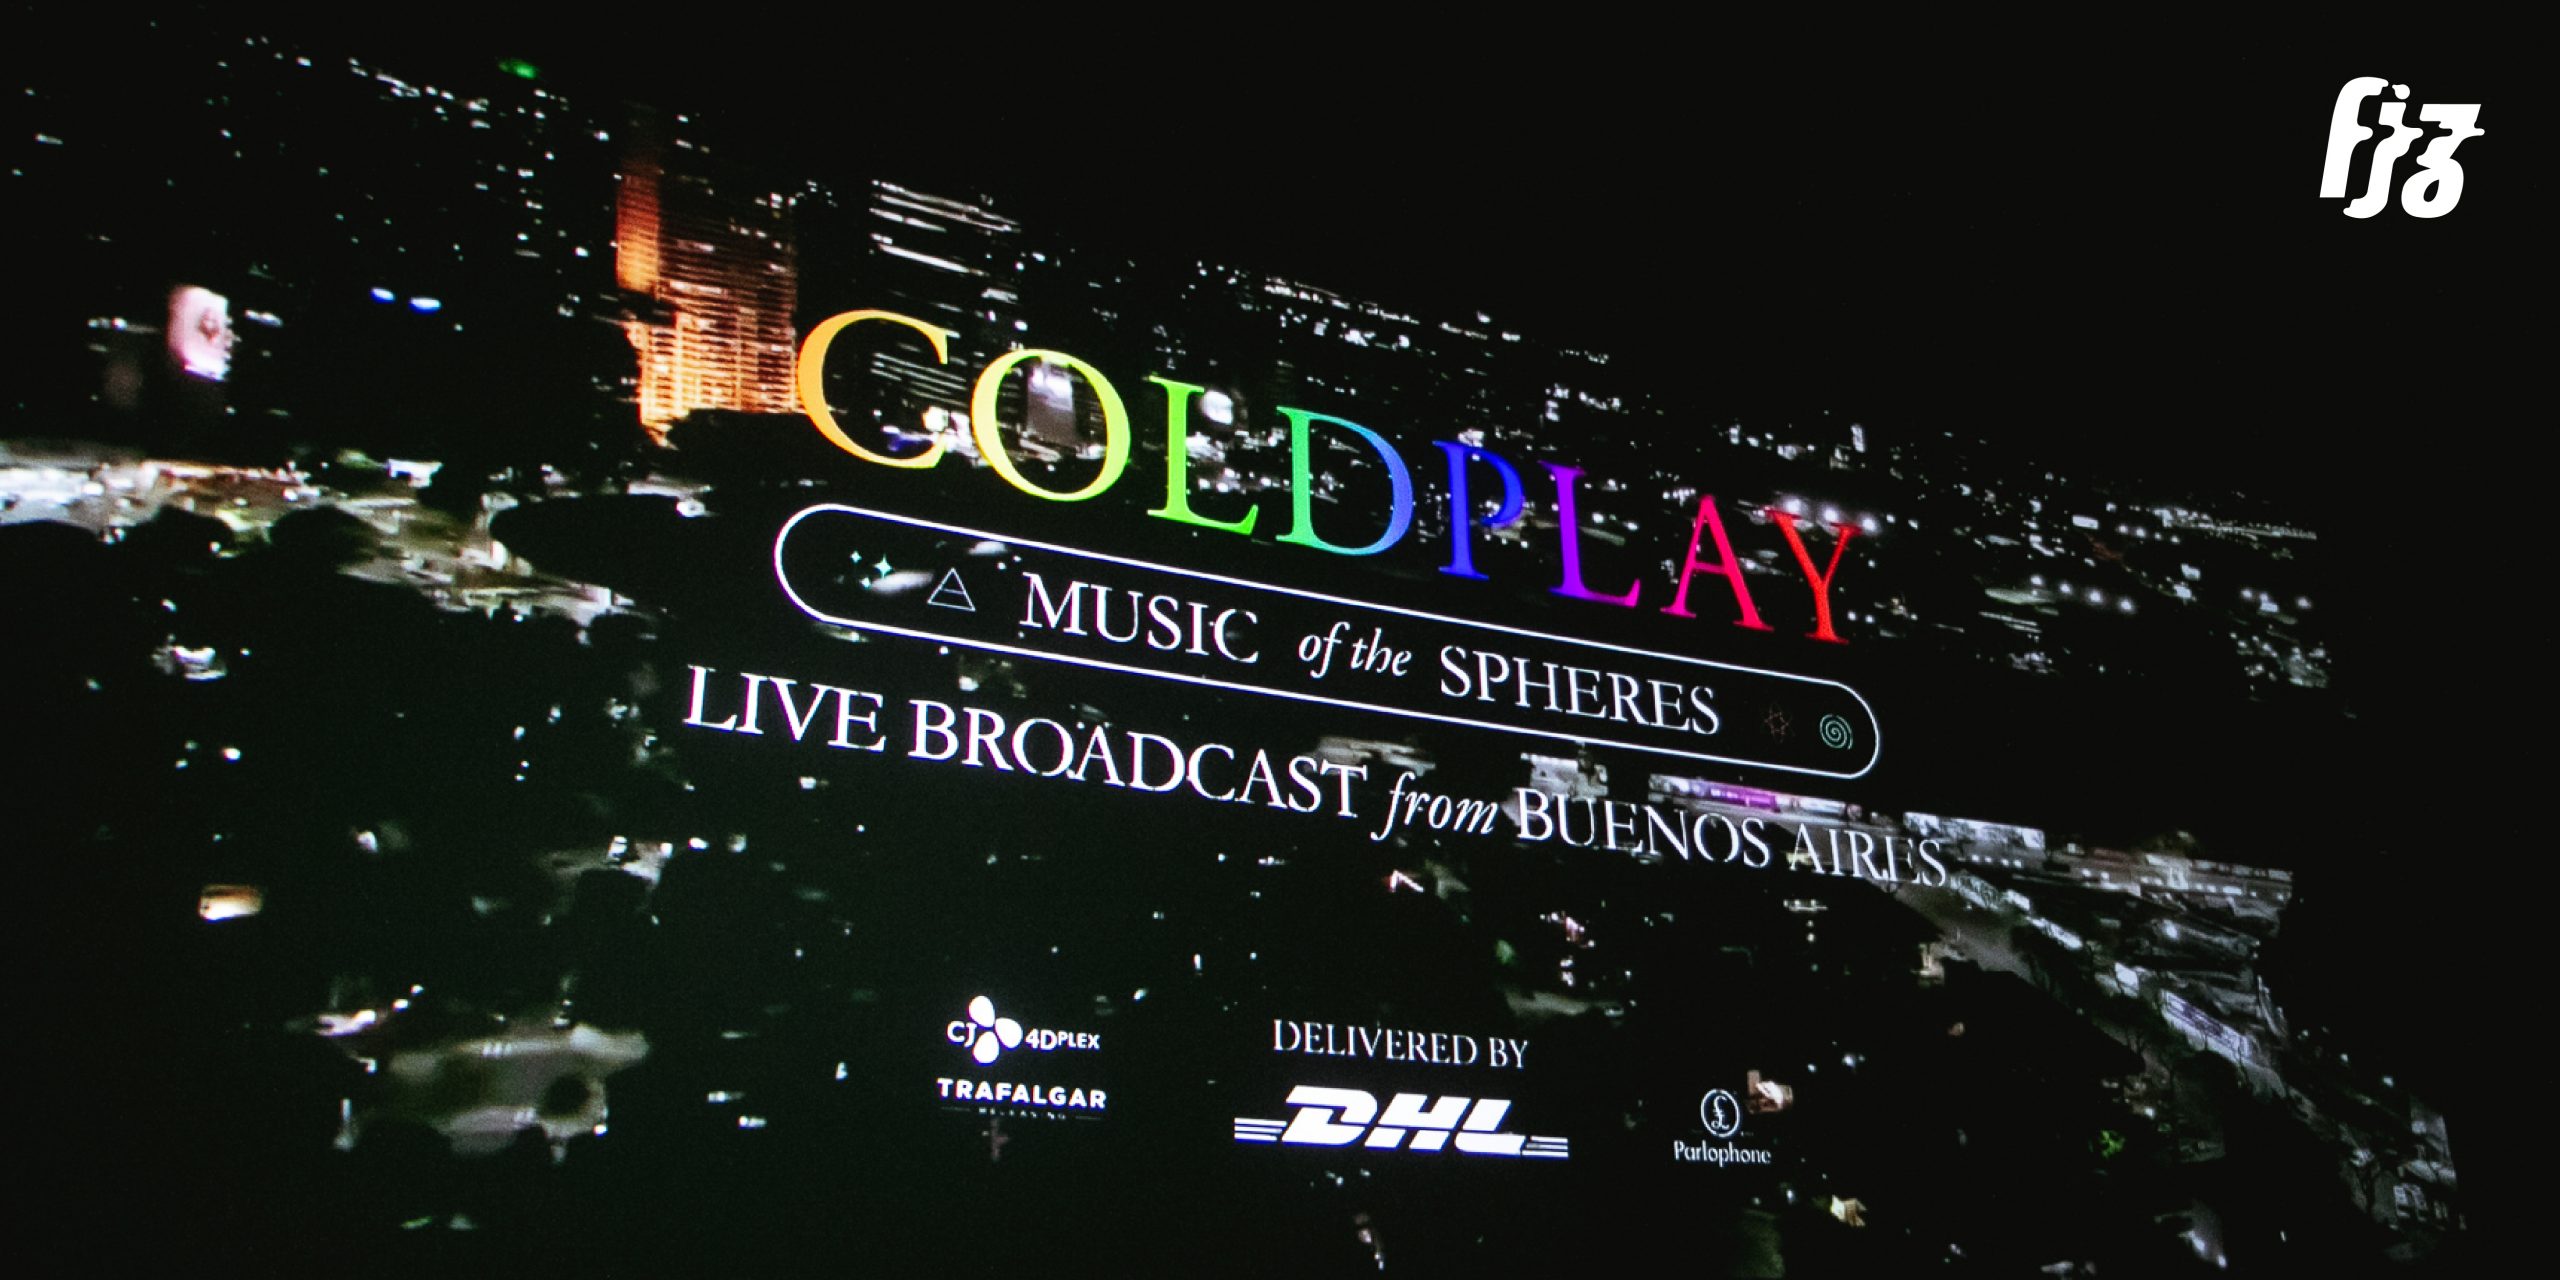 ‘Music of the Spheres Tour’ การกลับมาทัวร์คอนเสิร์ตอีกครั้งของ Coldplay